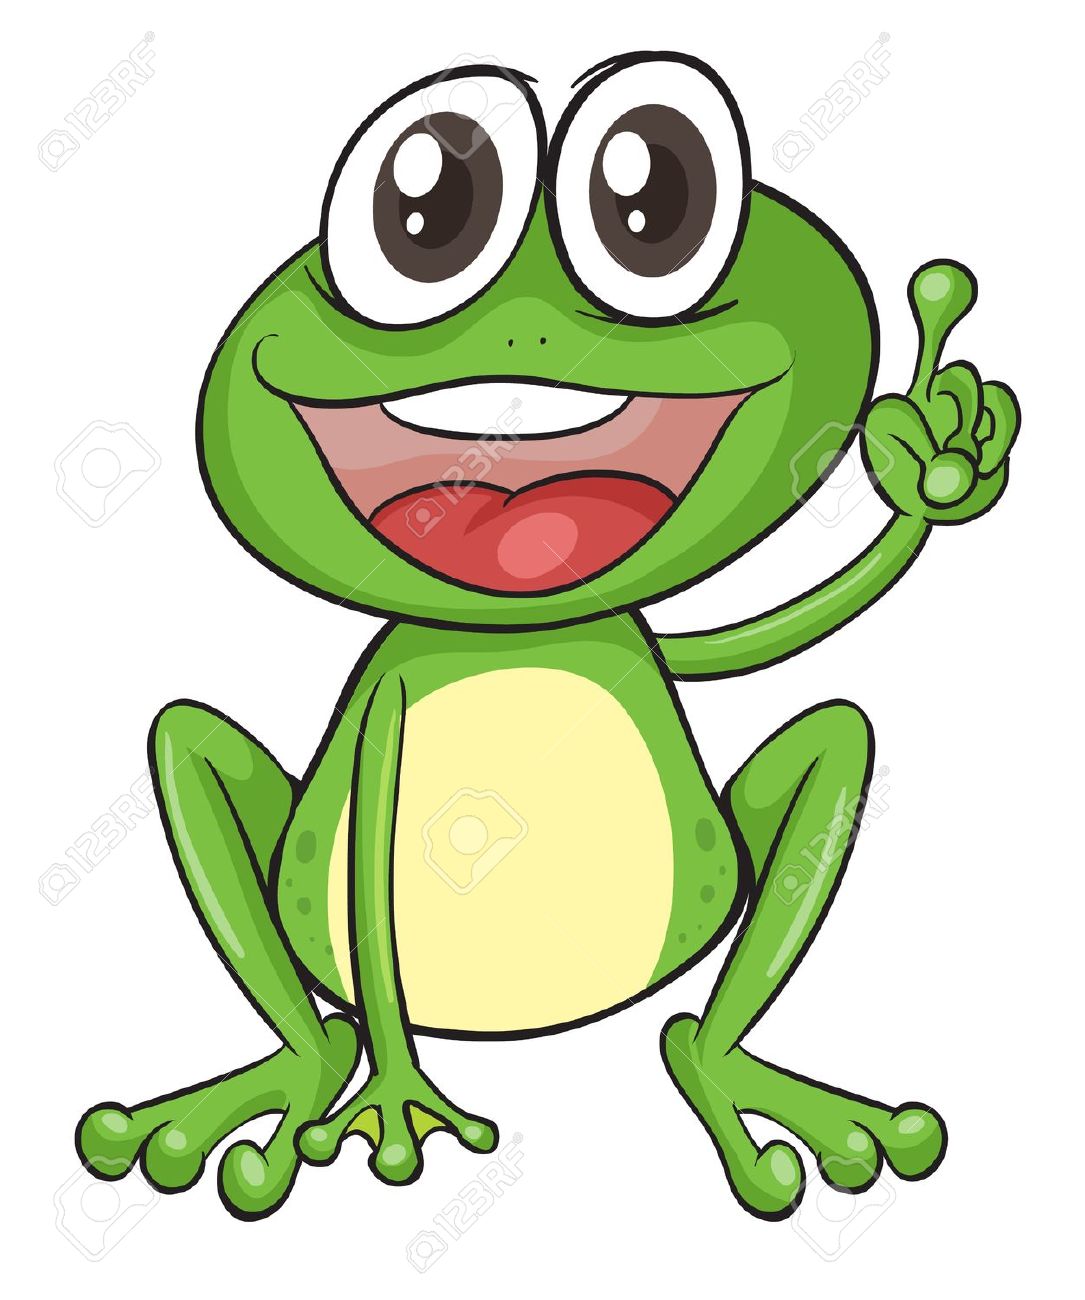 free clipart frog cartoon - photo #24